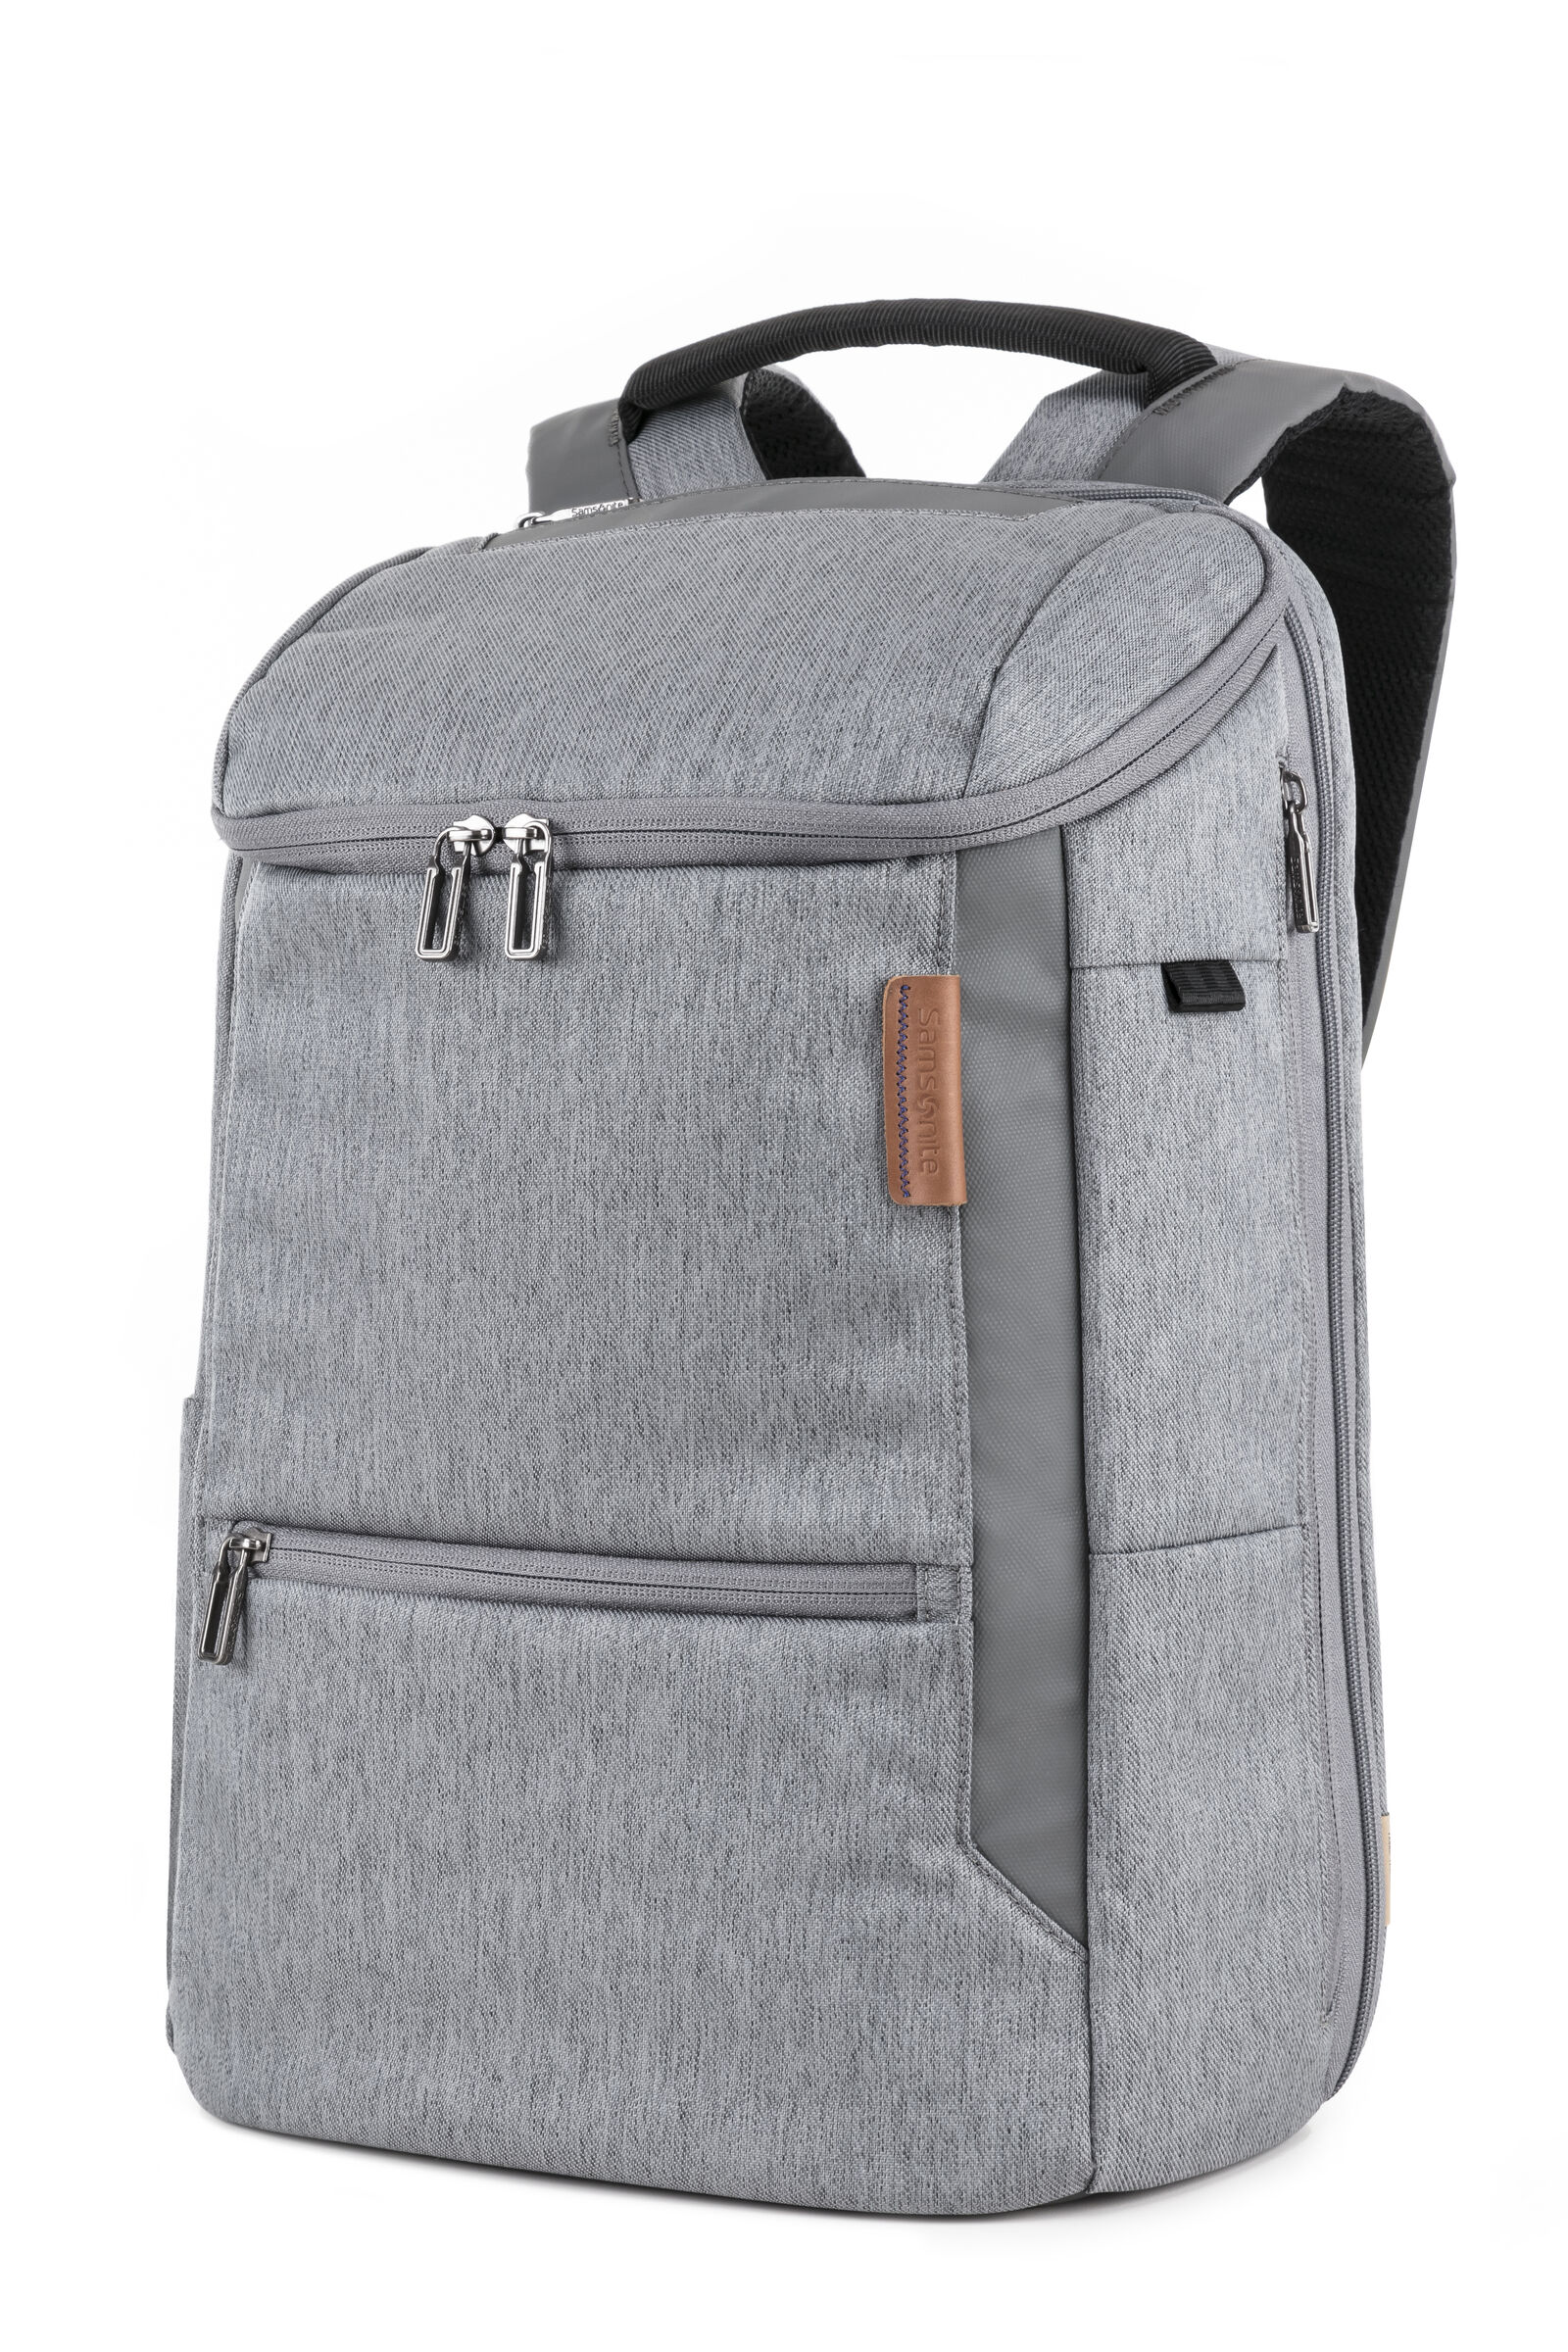 Canvas Backpacks For College Store, 52% OFF | www.gruposincom.es